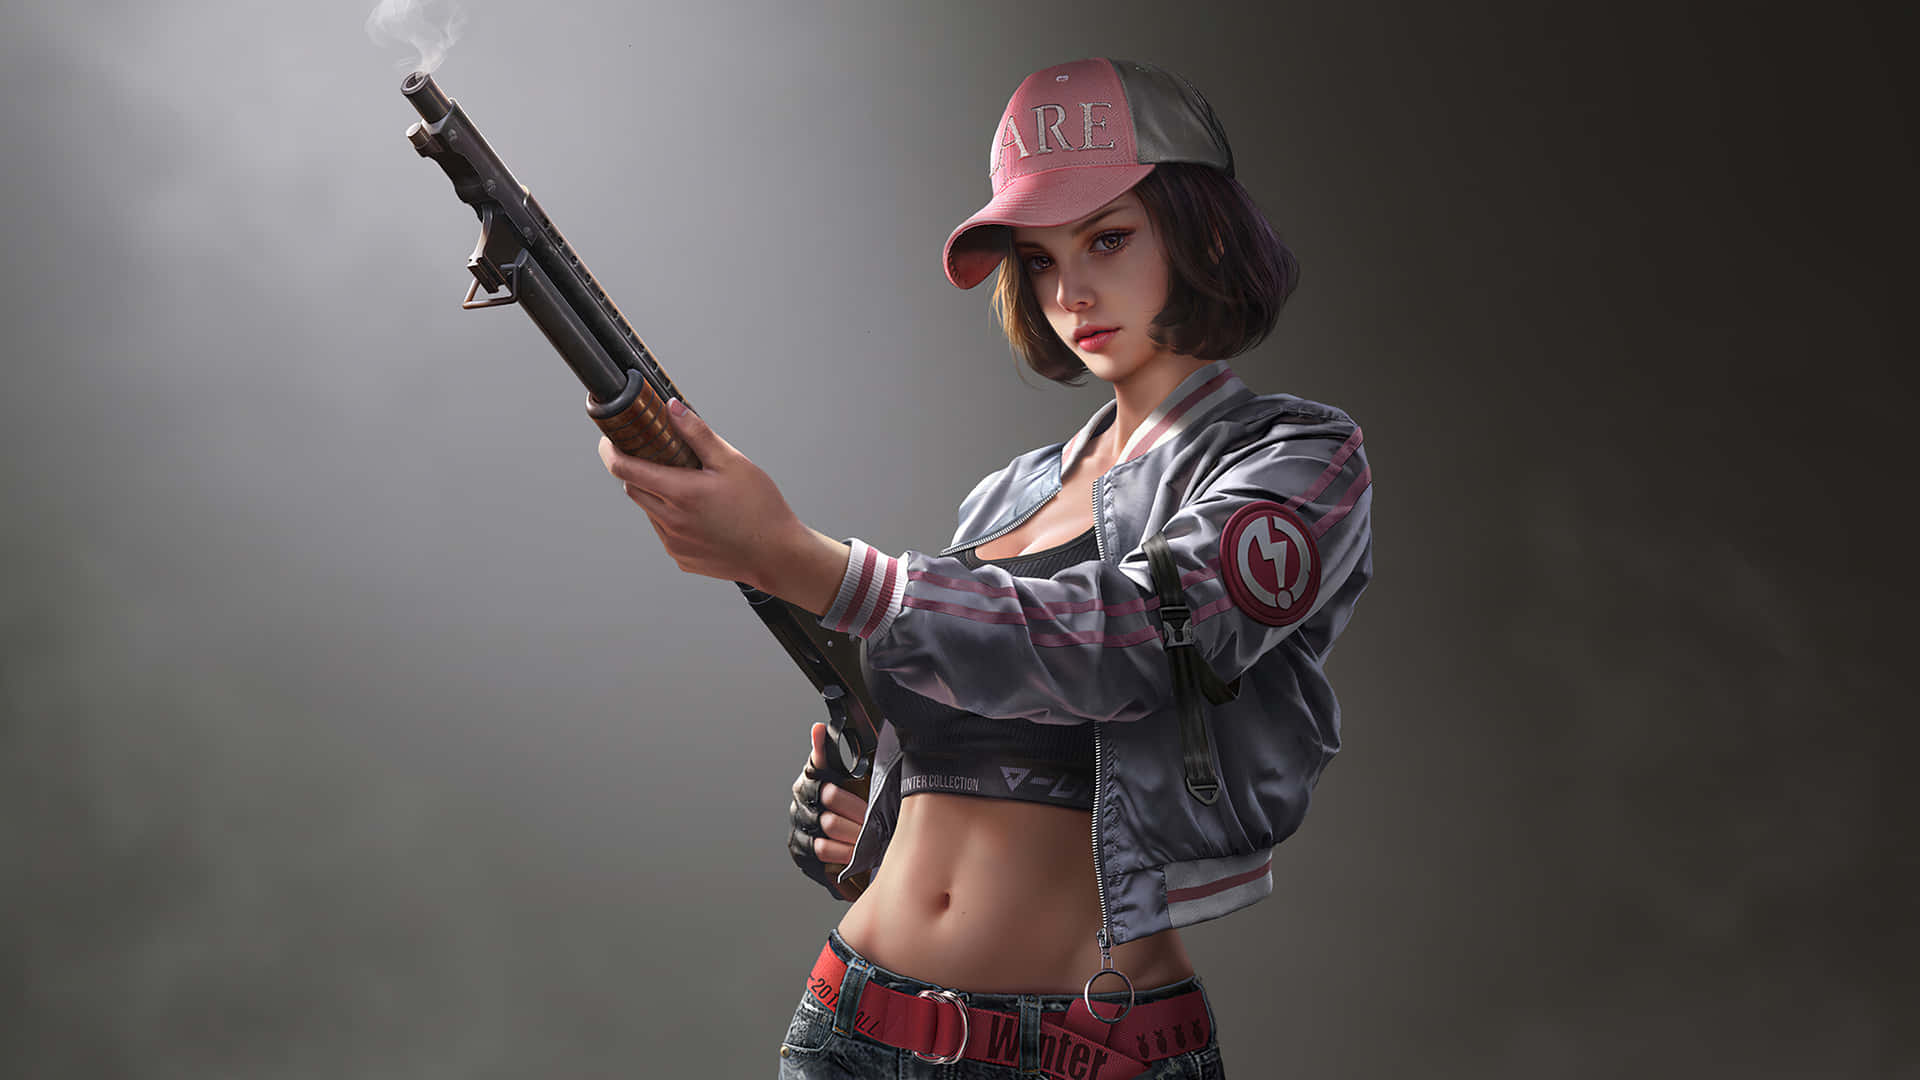 a woman holding a gun in a dark room Wallpaper